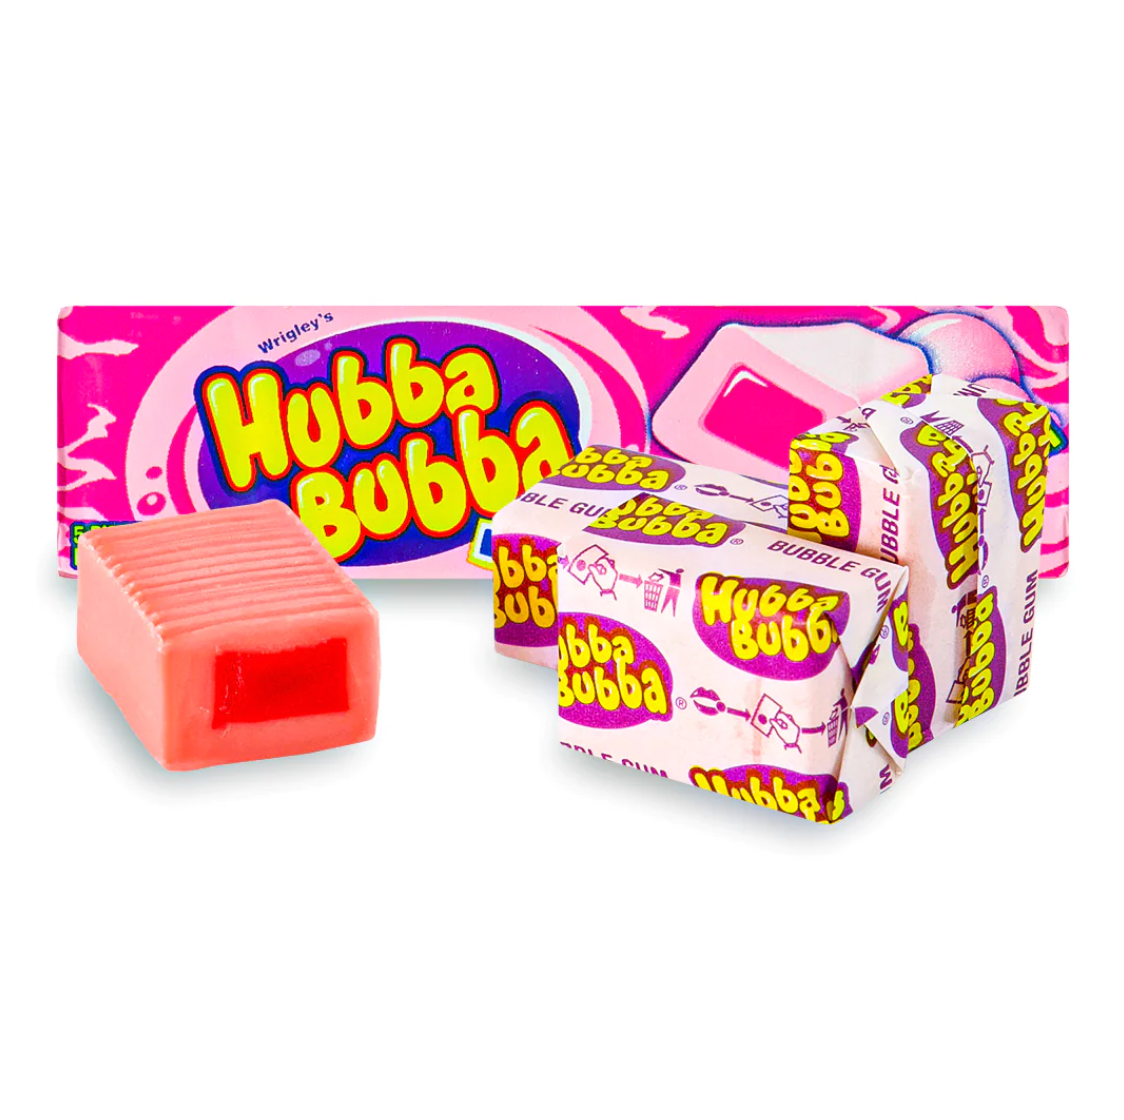 Hubba Bubba - Max Outrageous Original - Bubble Gum